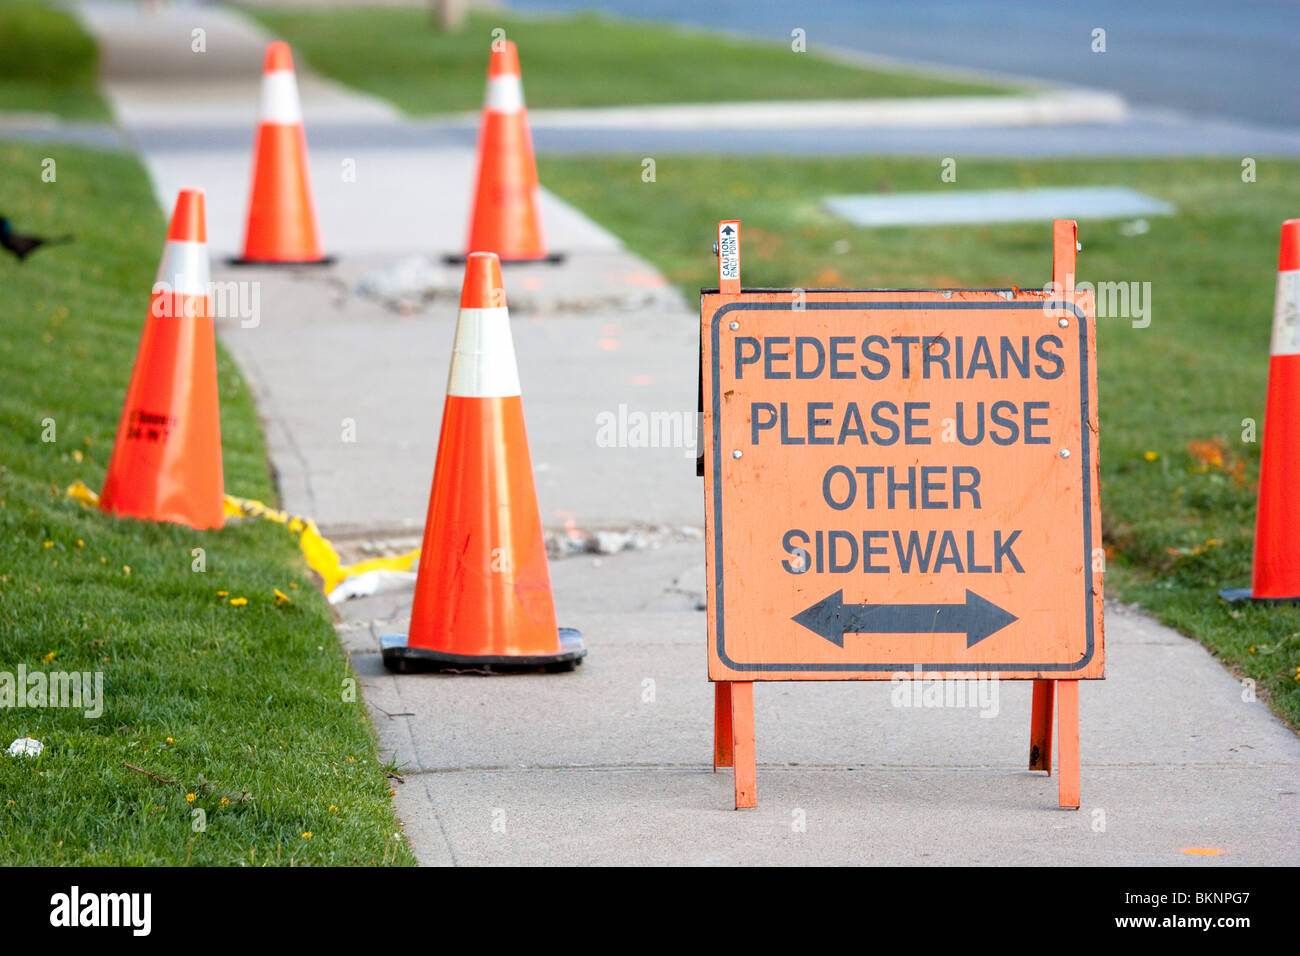 pedestrians please use other side walk orange sign broken road orange cone  cones danger concrete walkway grass Stock Photo